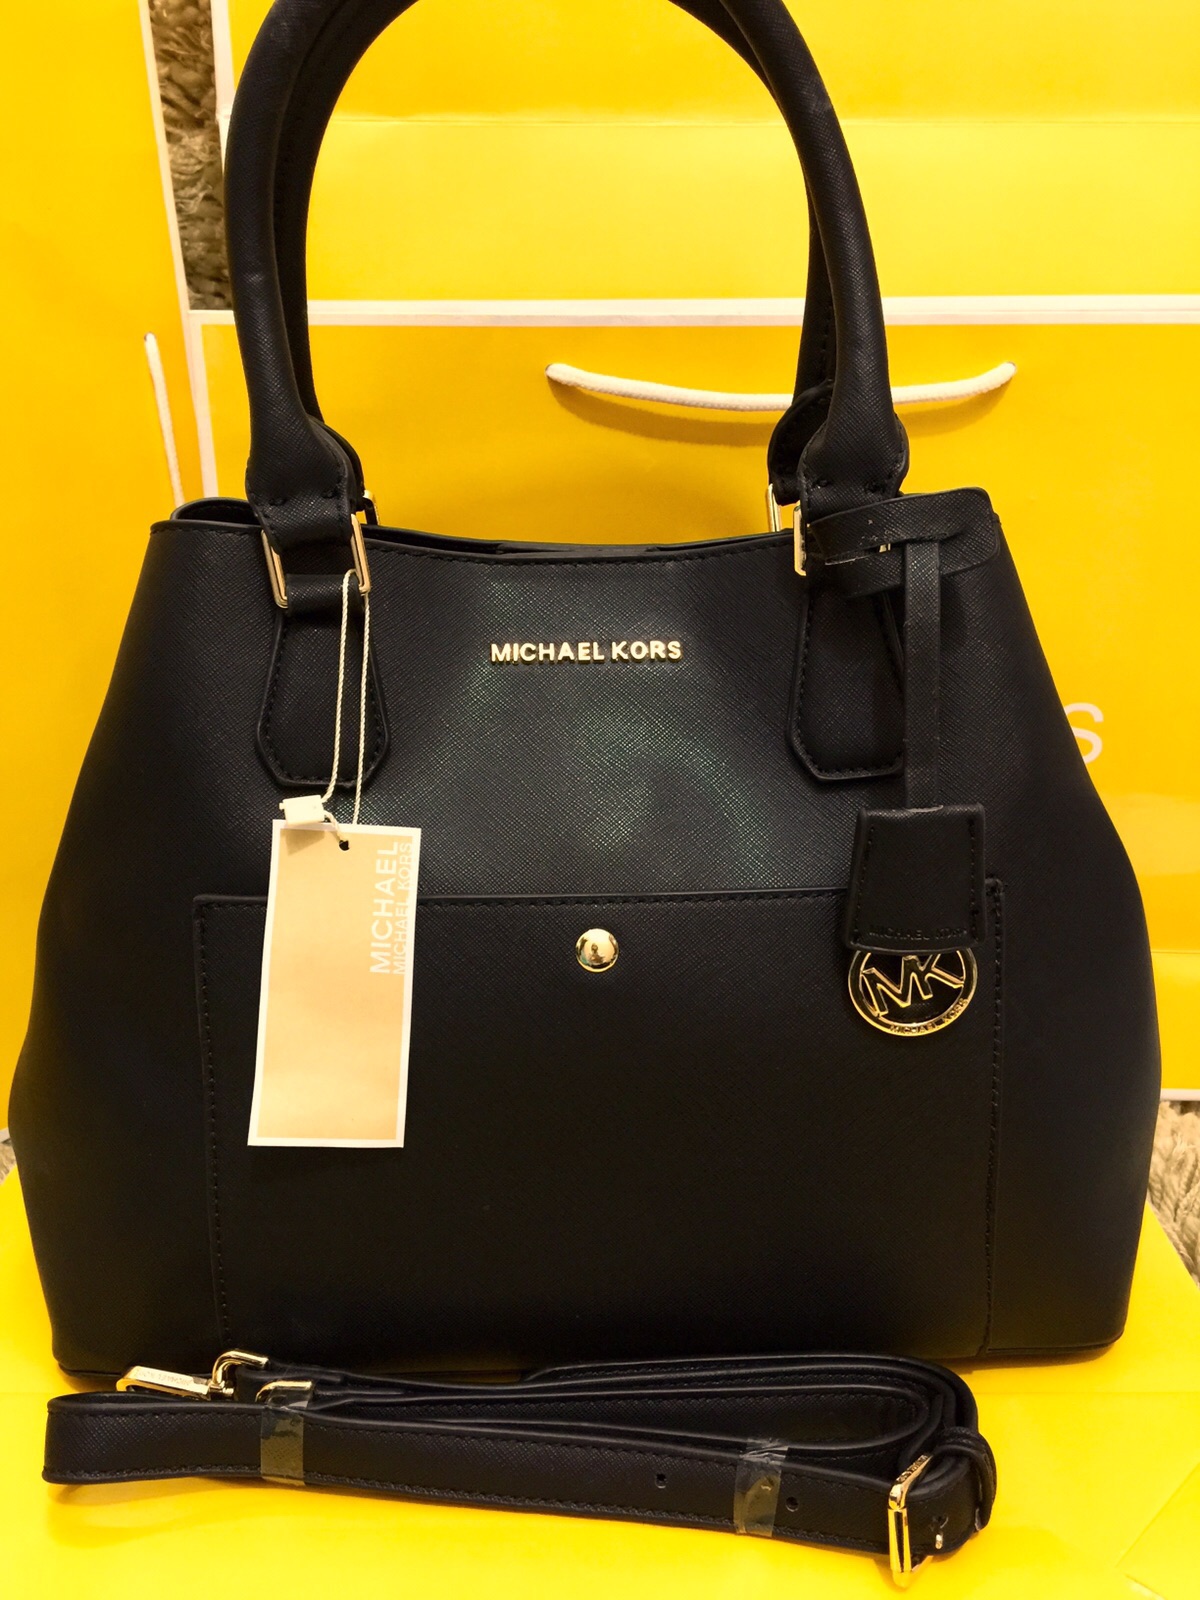 Buy Cream Handbags for Women by Michael Kors Online | Ajio.com